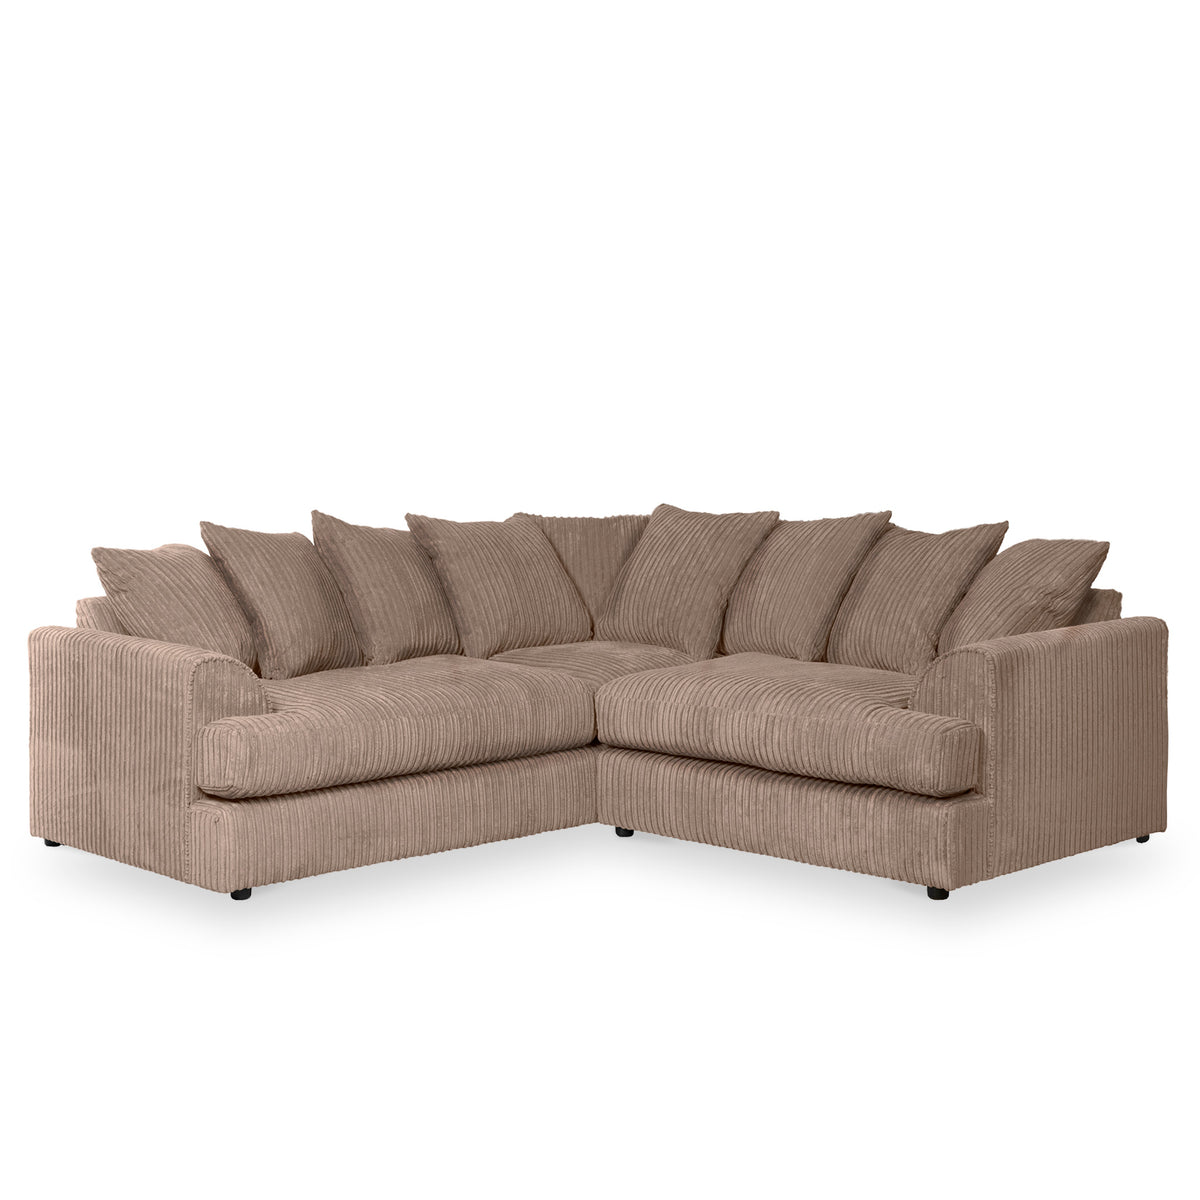 Bletchley Coffee Jumbo Cord Corner Sofa from Roseland Furniture